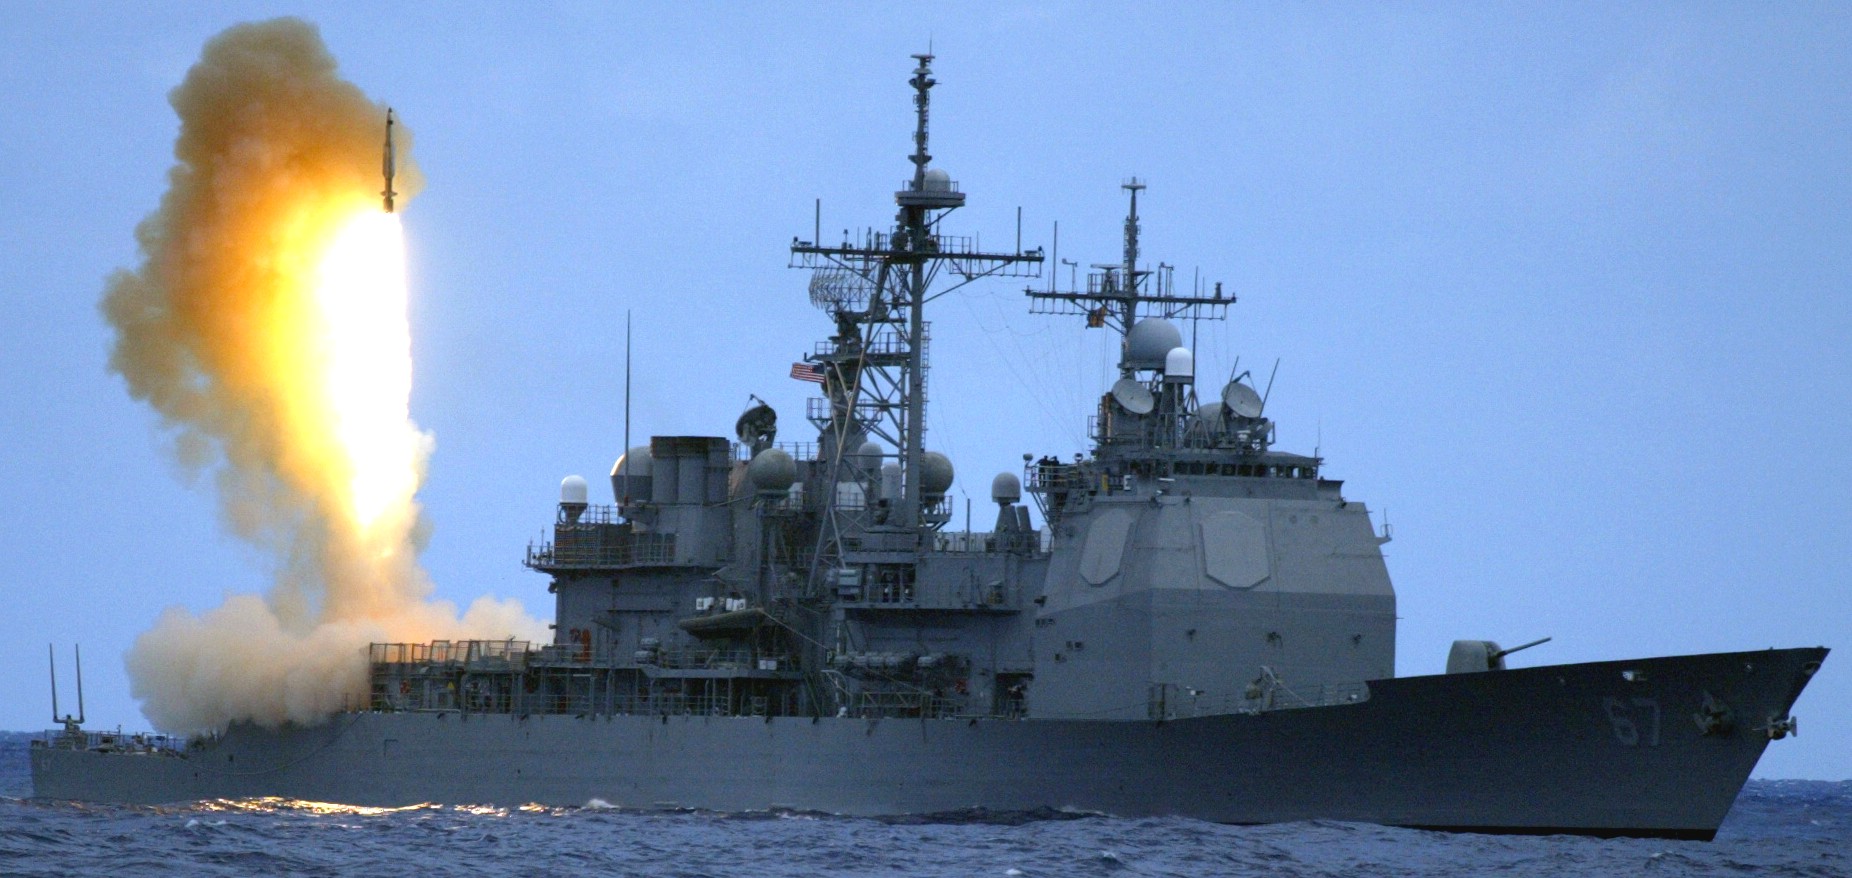 cg-67 uss shiloh ticonderoga class guided missile cruiser aegis us navy rim-161 standard missile sm-3 11